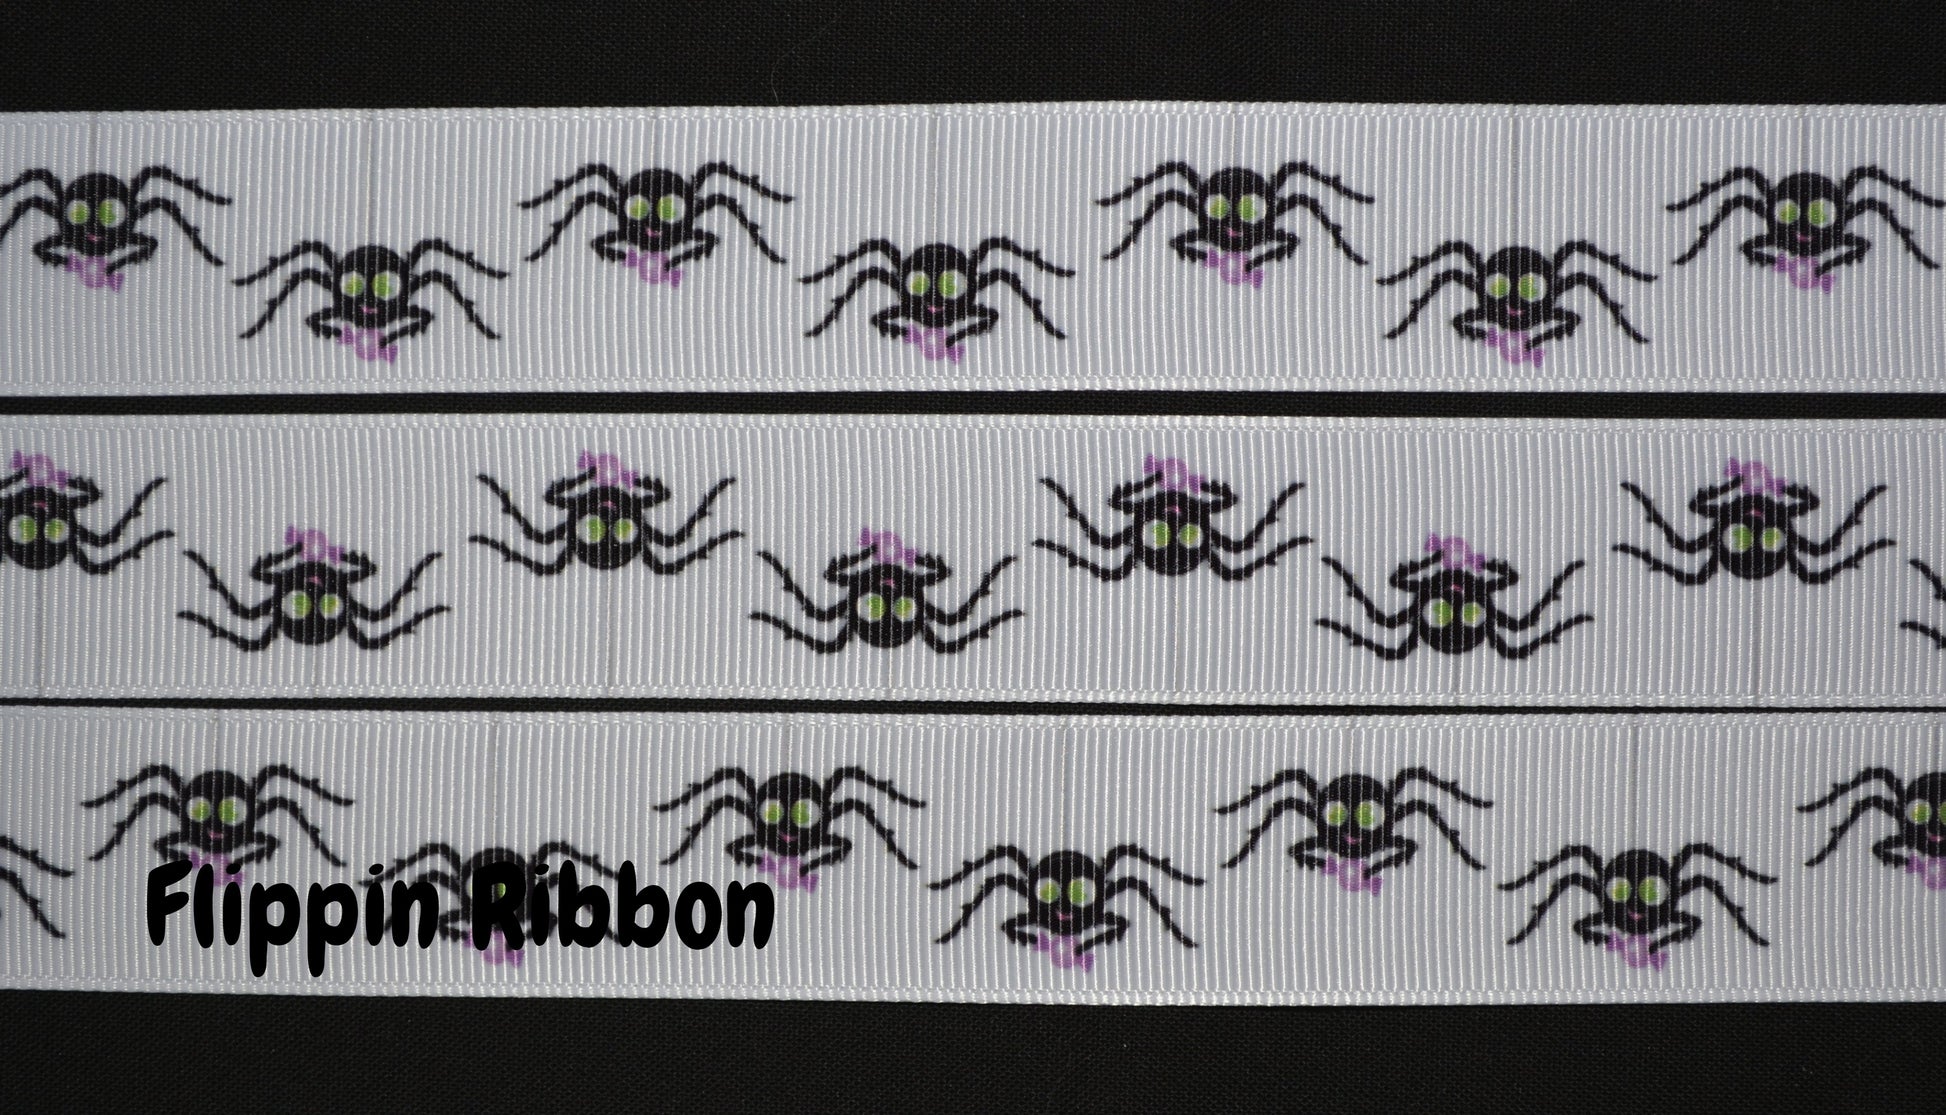 Candy Spider ribbon - Flippin Ribbon